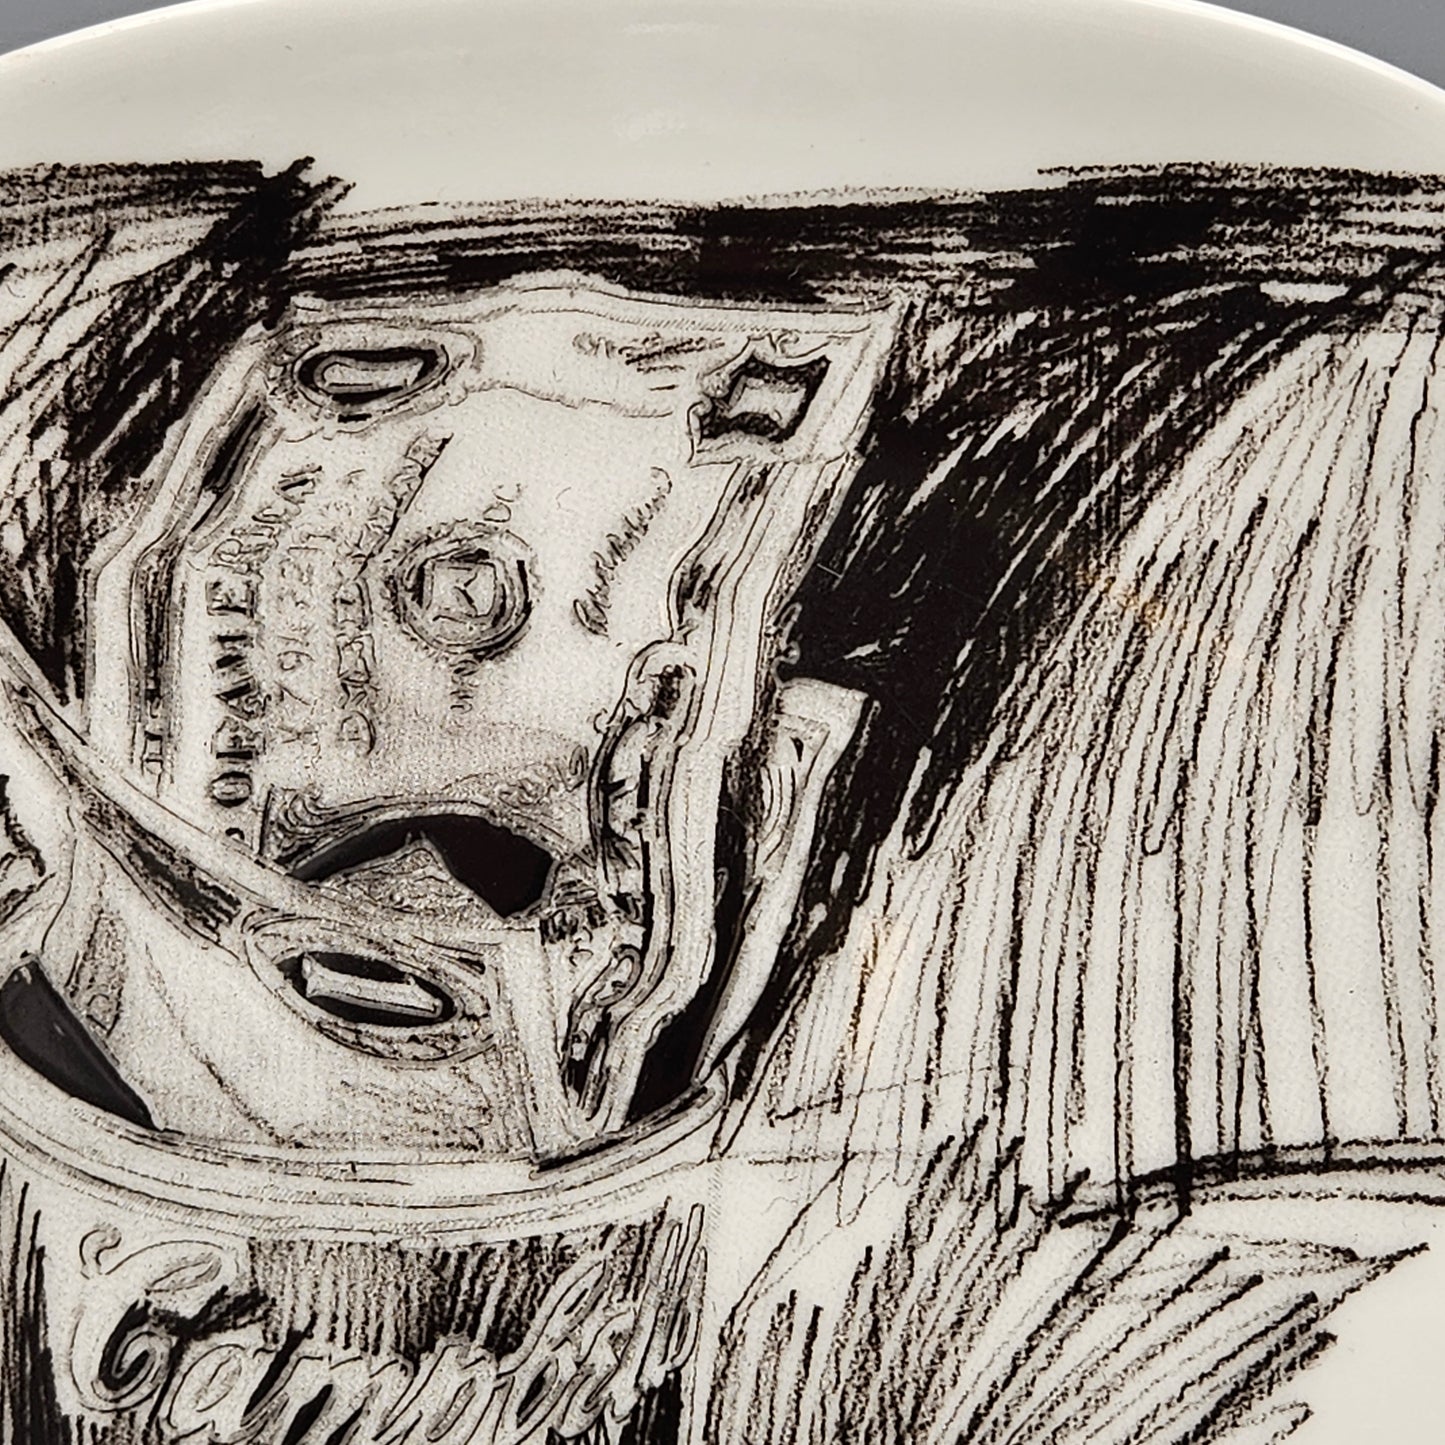 Block China Andy Warhol Soup Can & Dollar Bills Plate